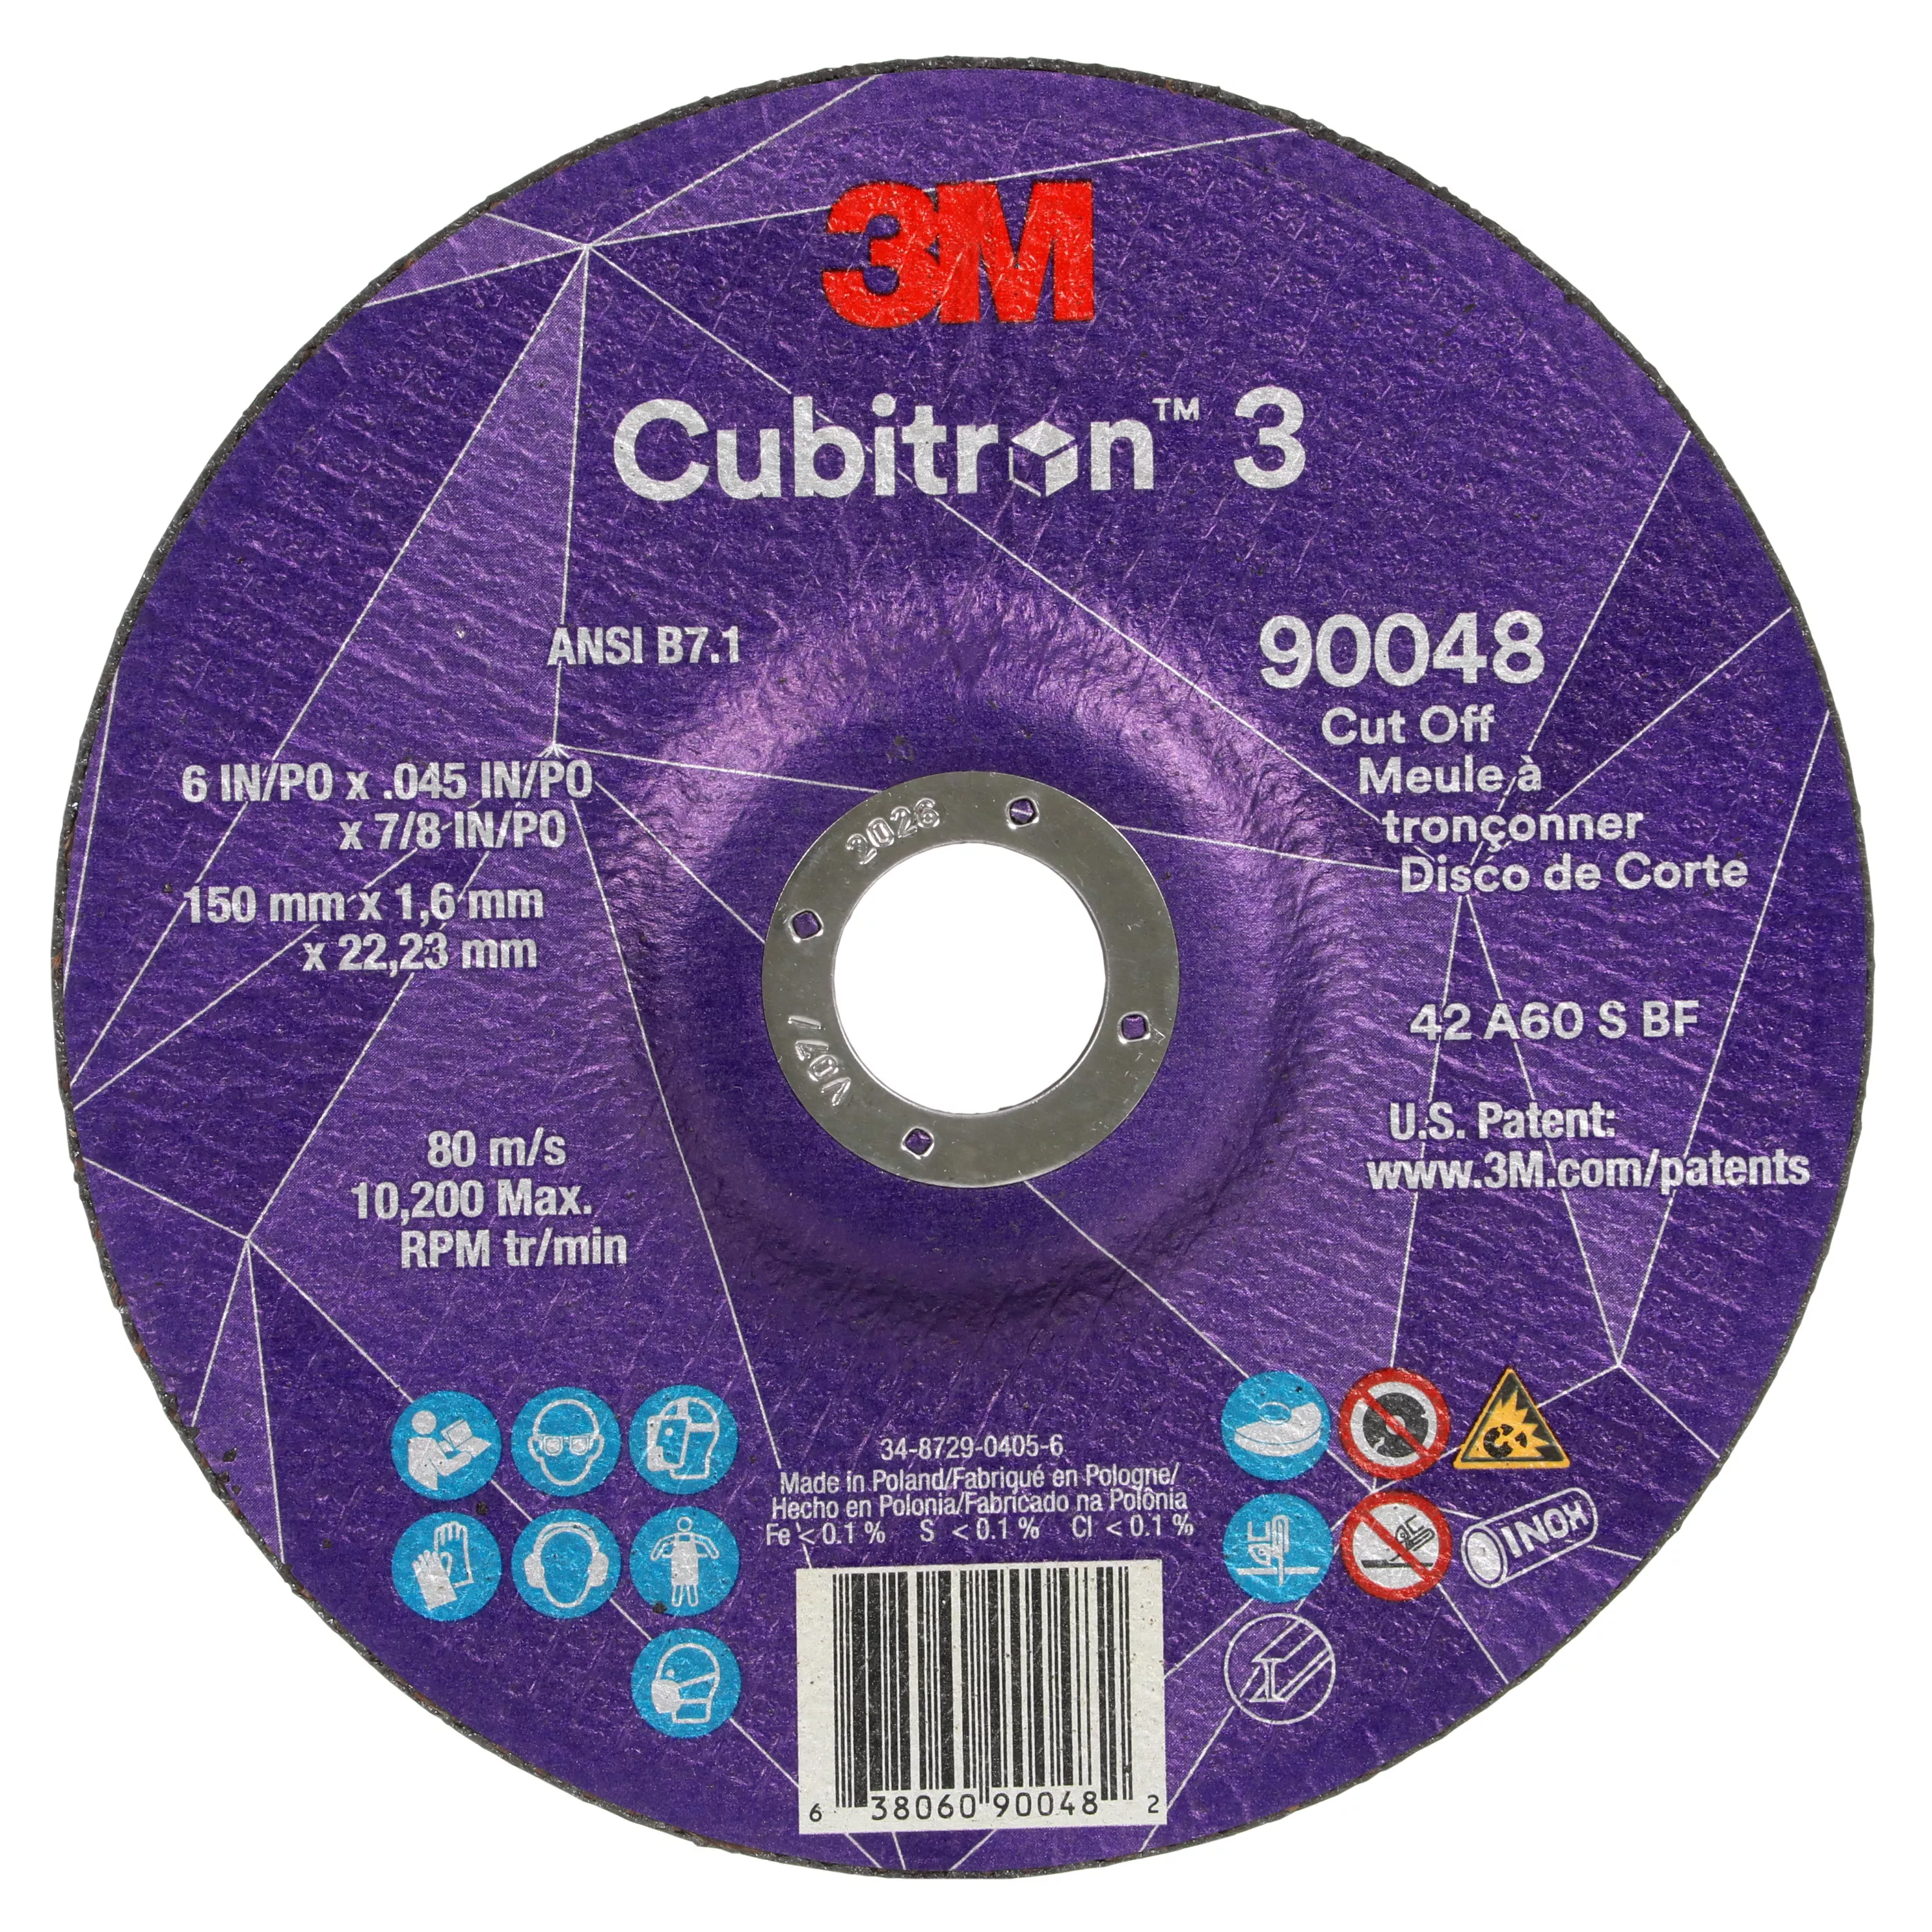 SKU 7100313201 | 3M™ Cubitron™ 3 Cut-Off Wheel